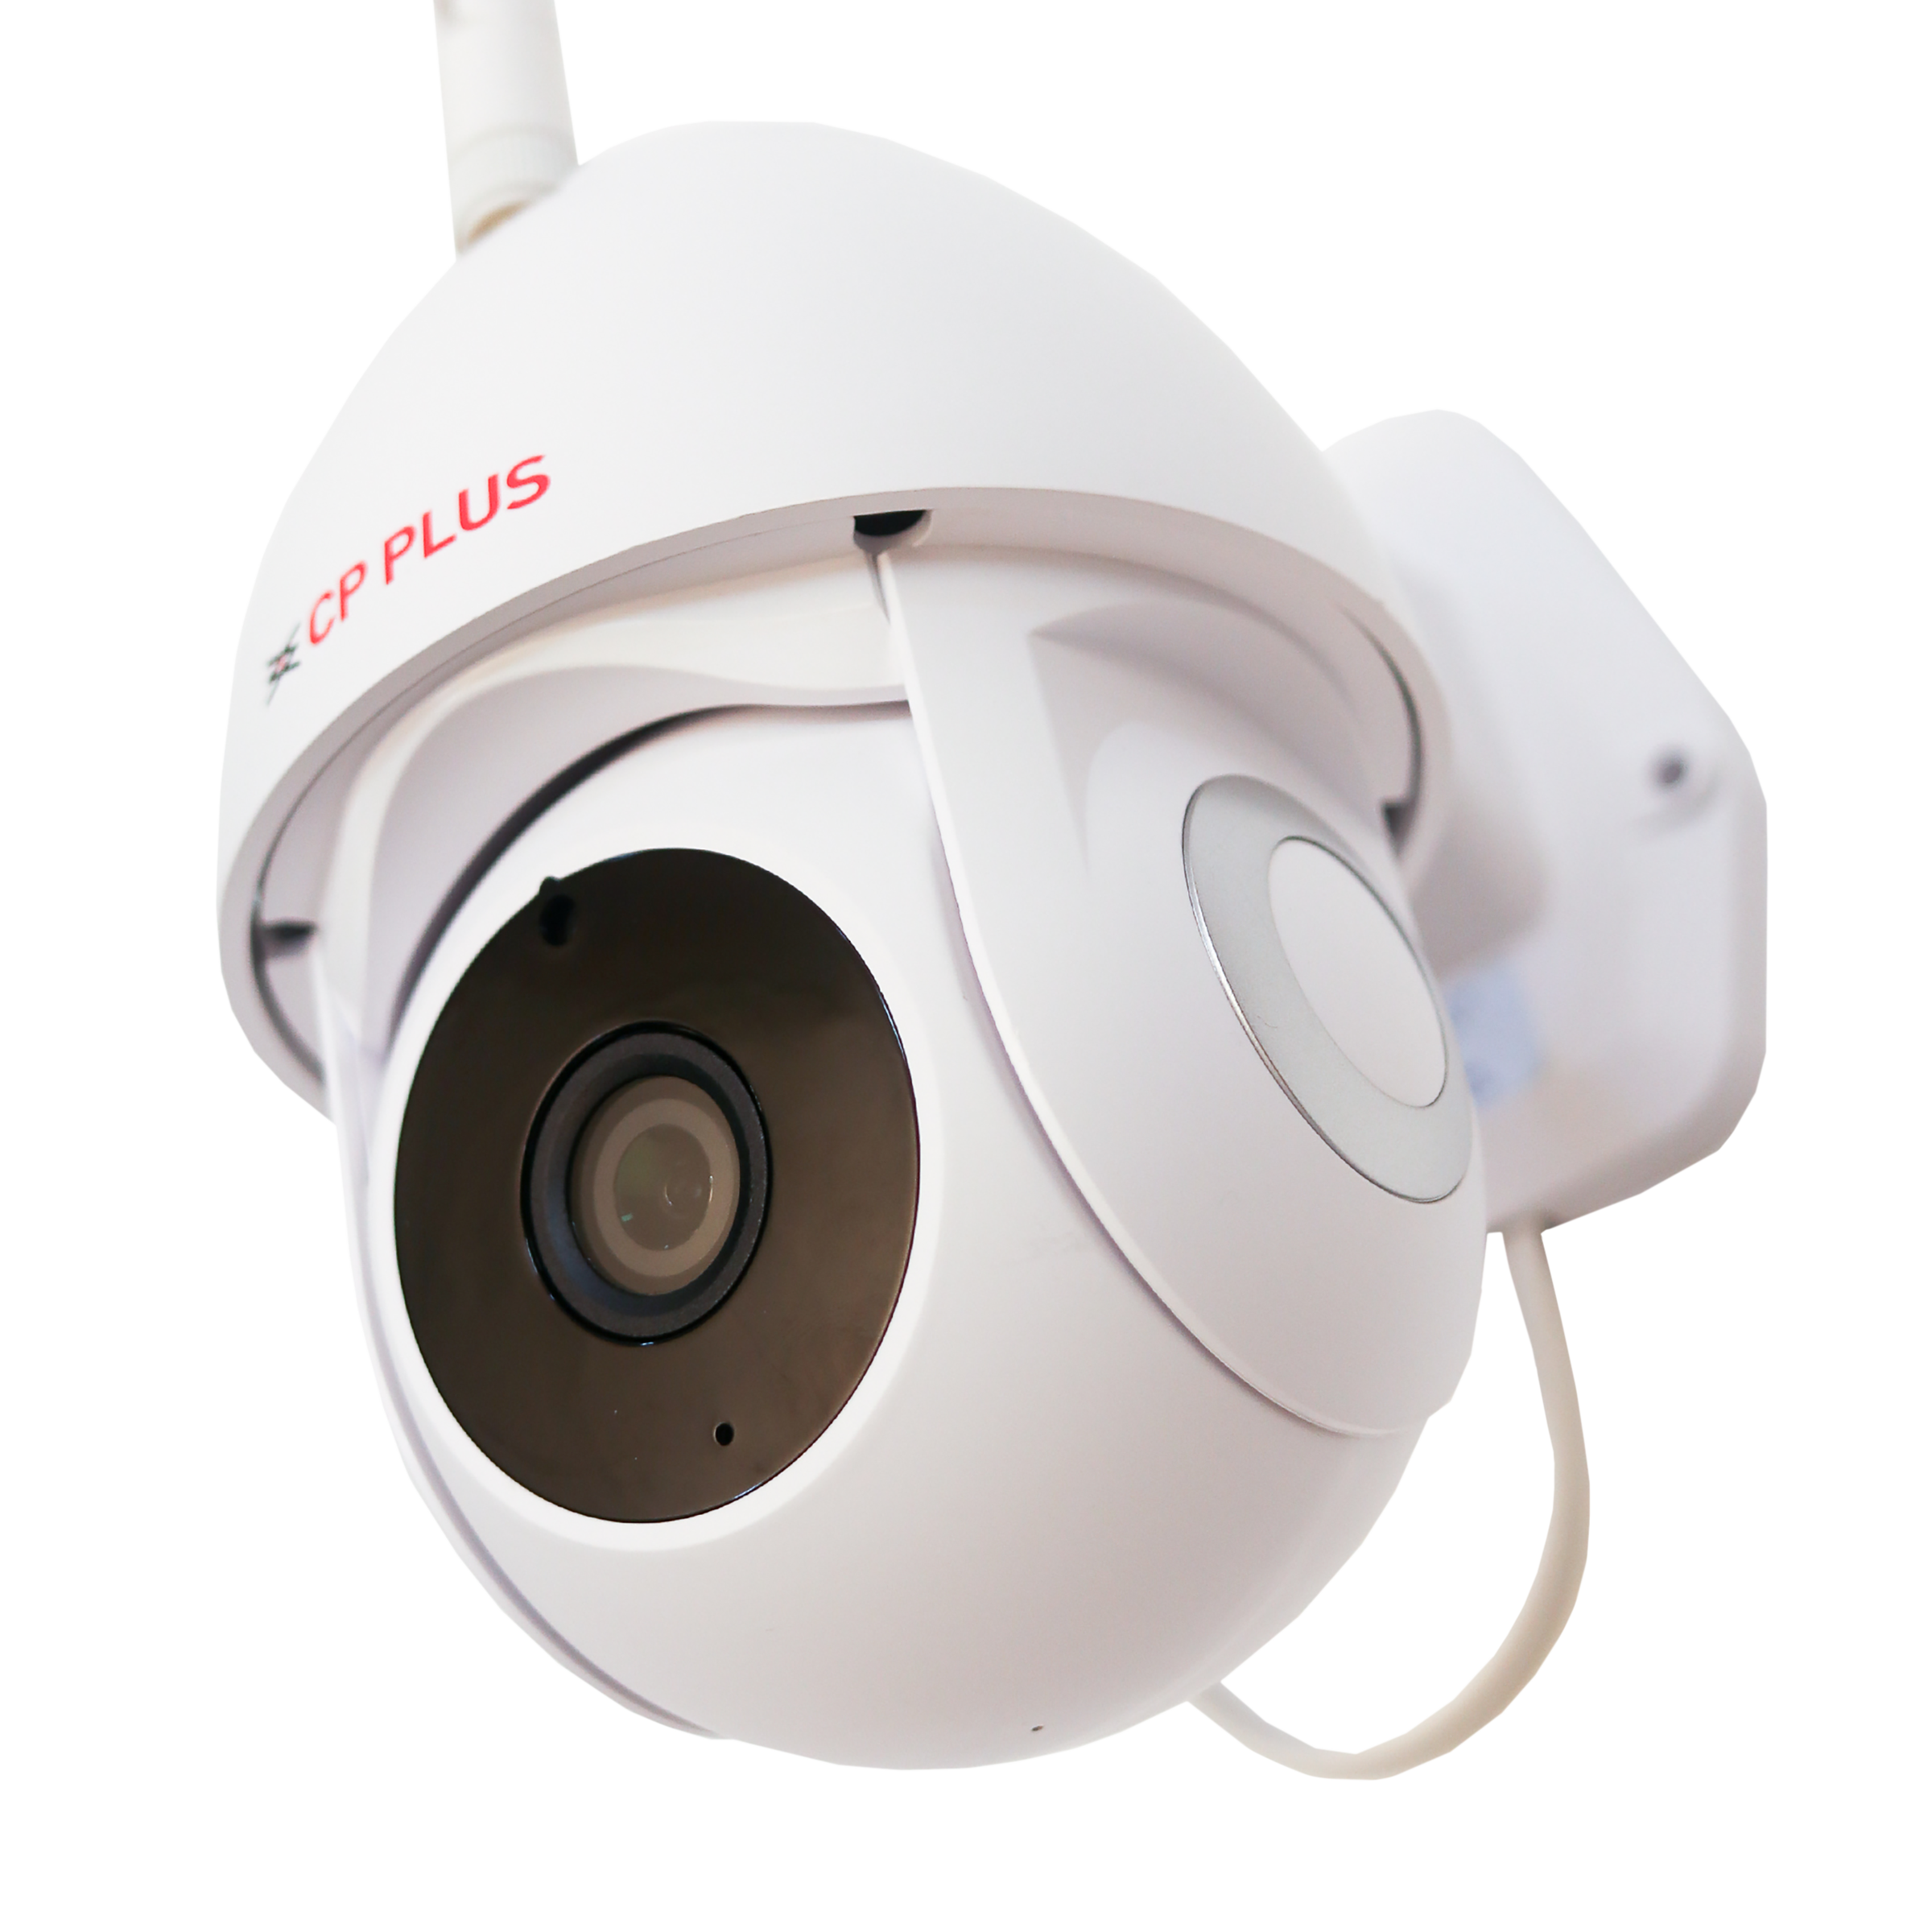 CP Plus CCTV Camera Manufacturer Supplier from Siliguri India